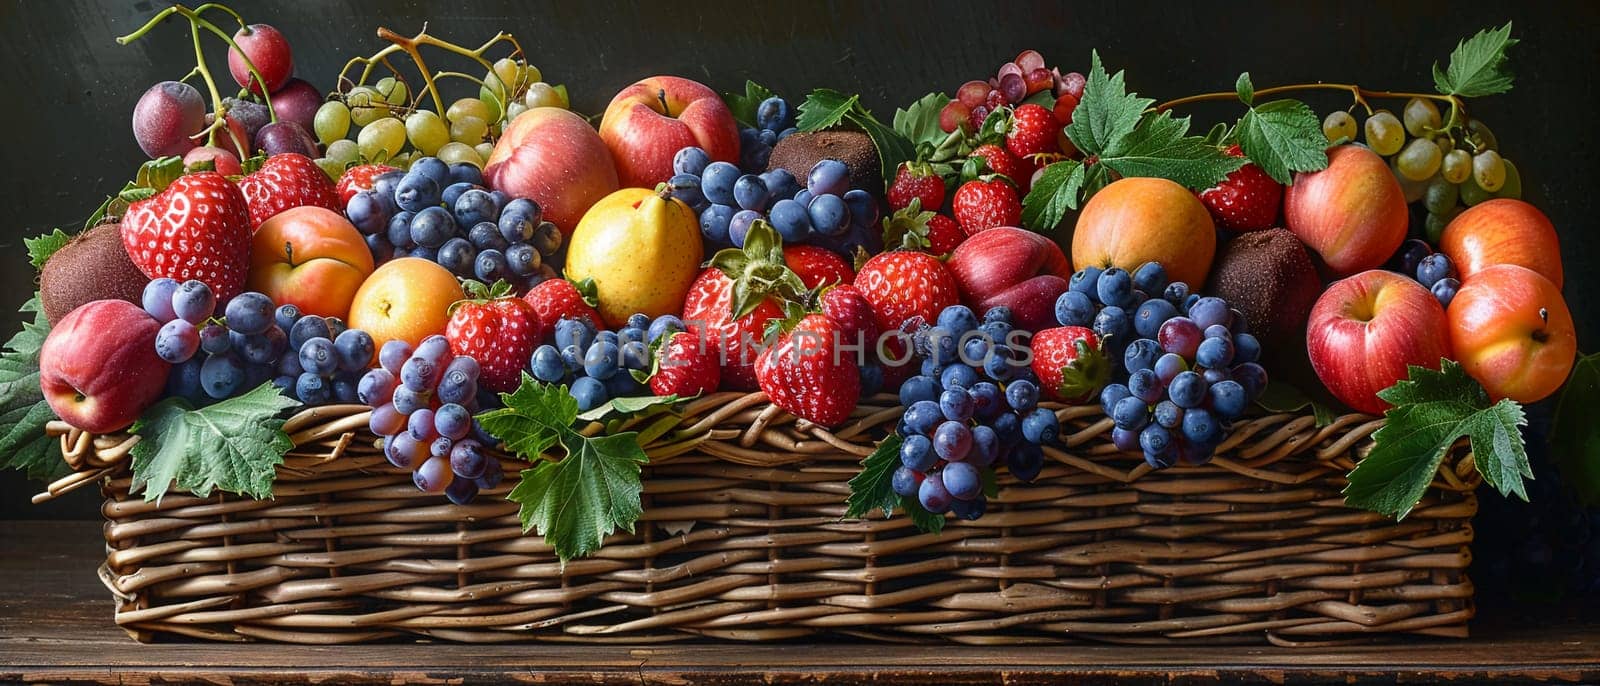 Basket of freshly picked fruit, evoking the freshness and abundance of summer